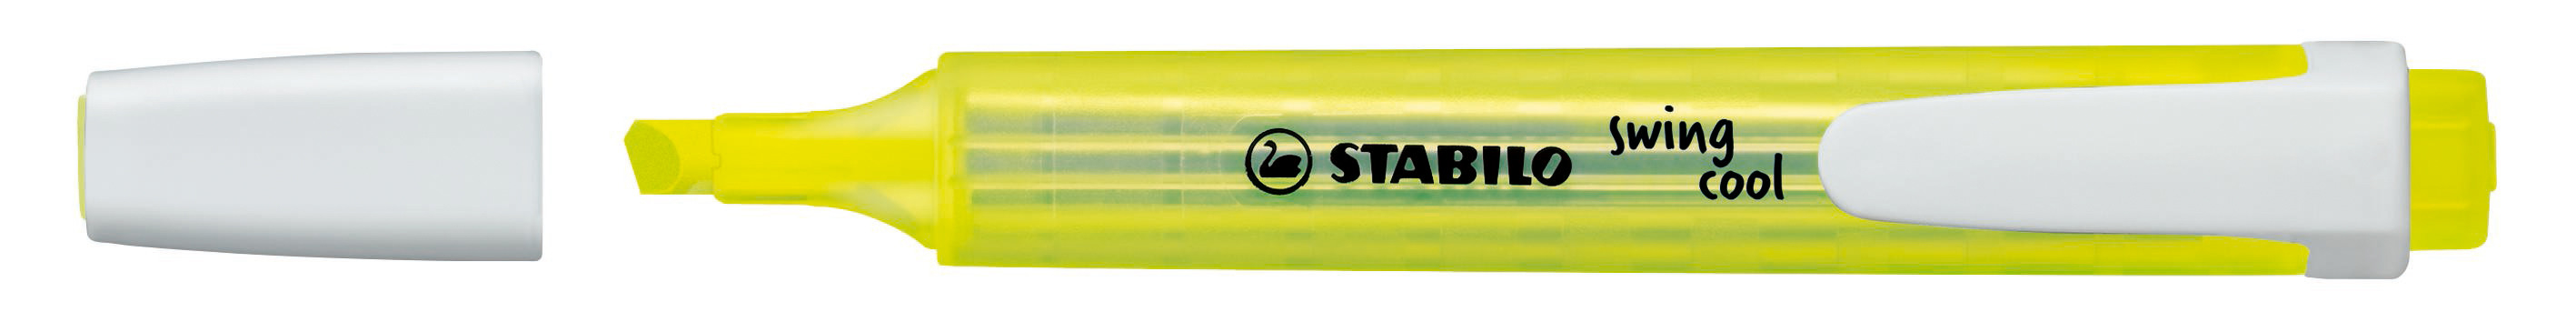 STABILO Swing Cool Leuchtmarker 275/24 gelb